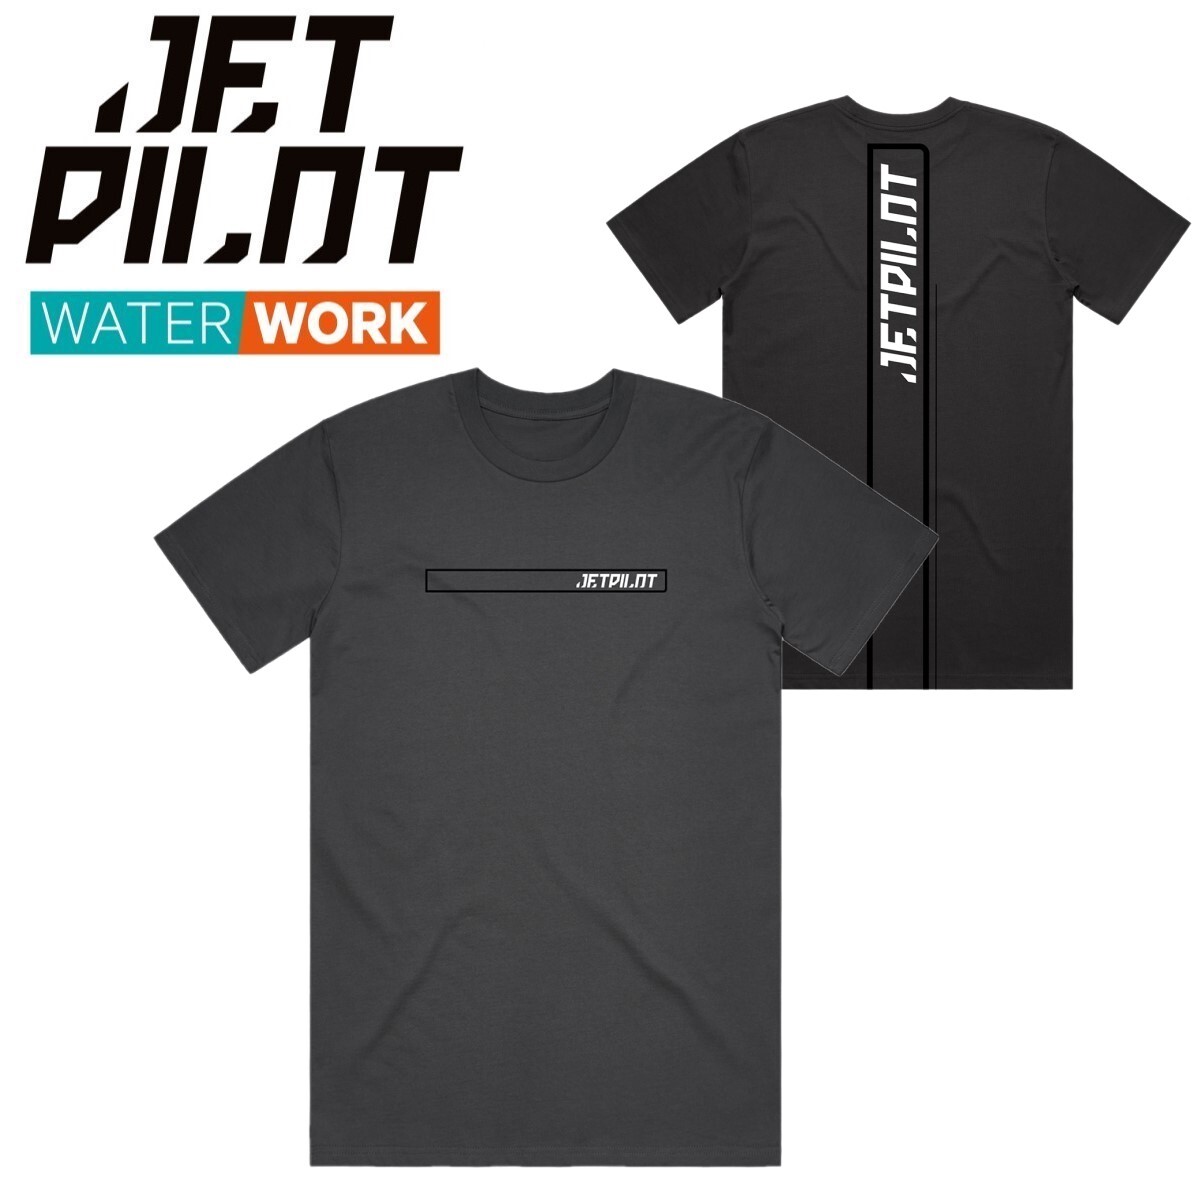  жиклер   Pilot  JETPILOT 2024  футболка   доставка бесплатно  ... S/S  футболка  W24606 ... M